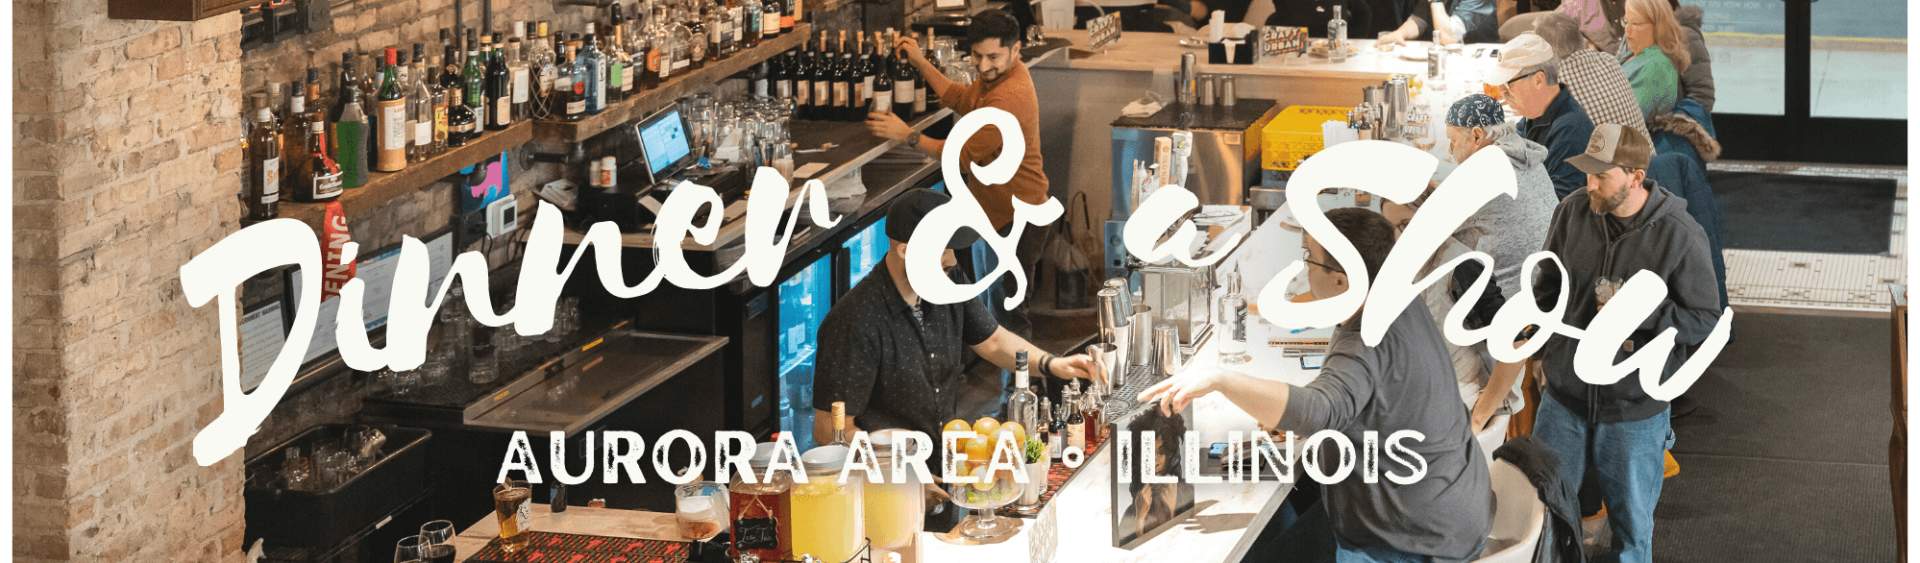 Top-Rated Aurora Bar & Restaurant - Spartan Ale House